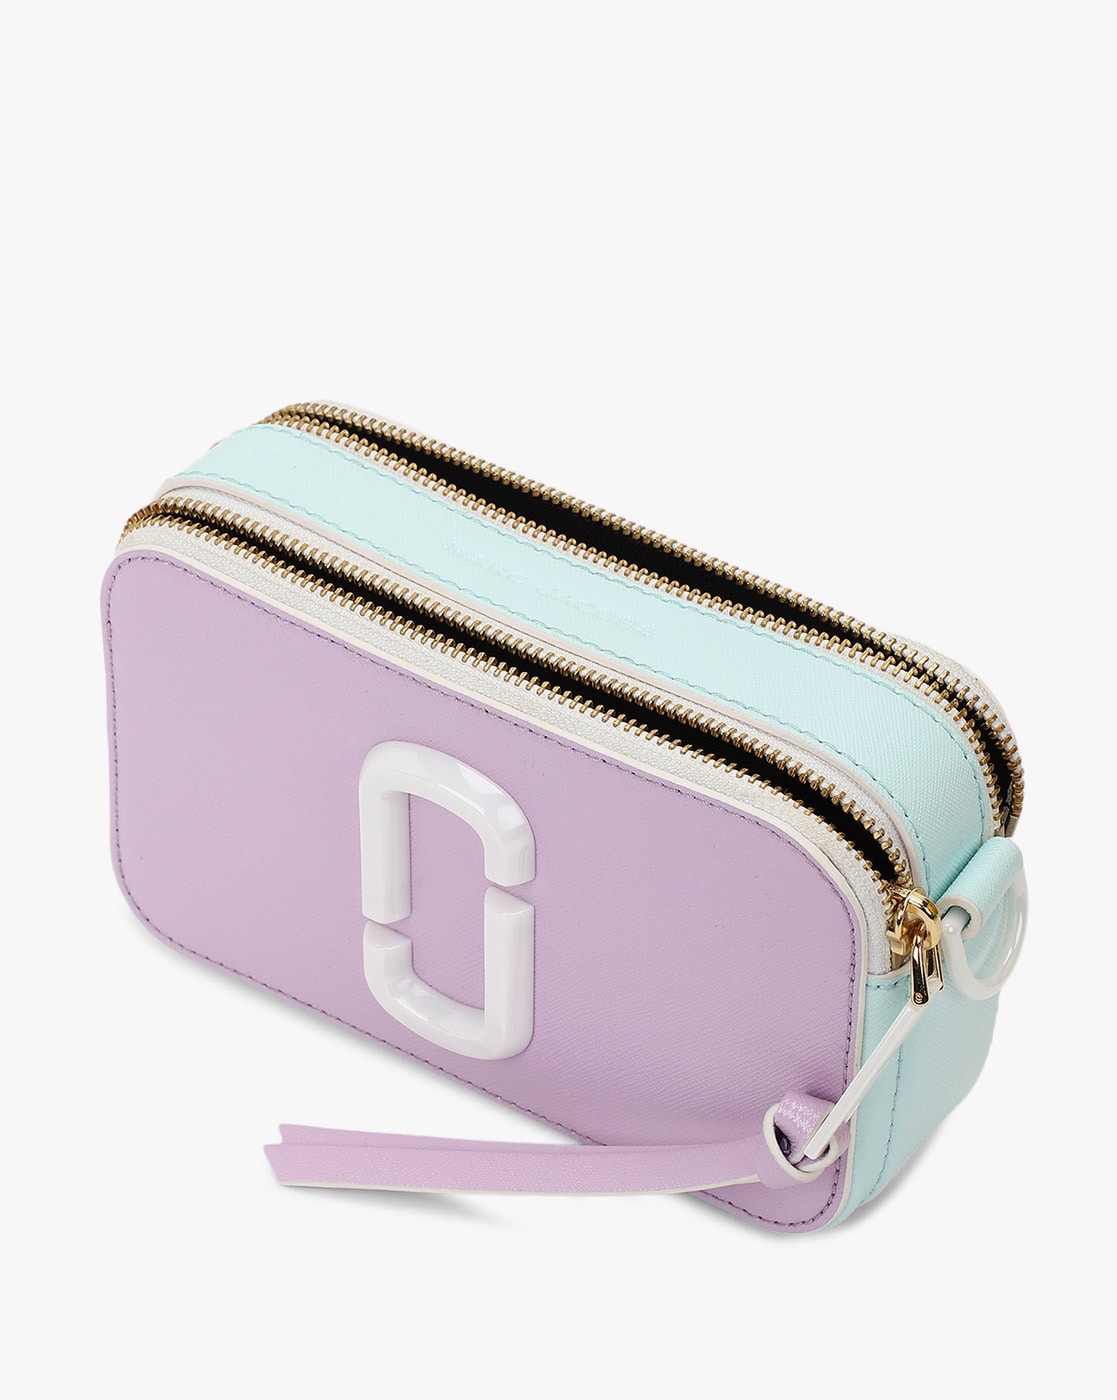 Buy Purple & Blue Handbags for Women by MARC JACOBS Online